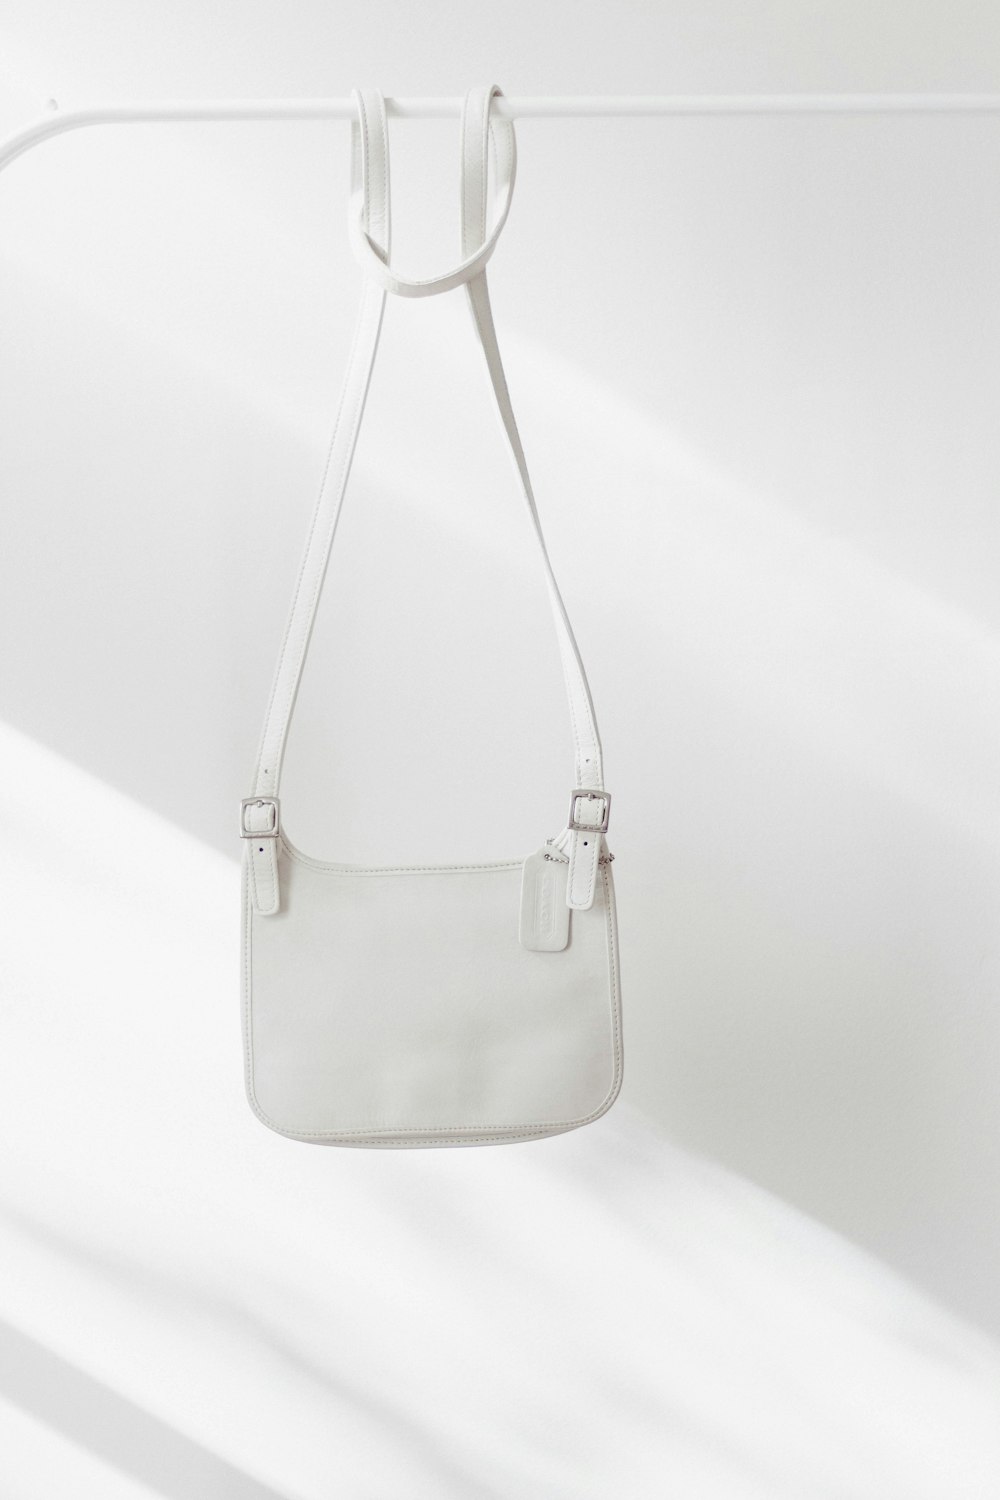 white leather handbag on white surface